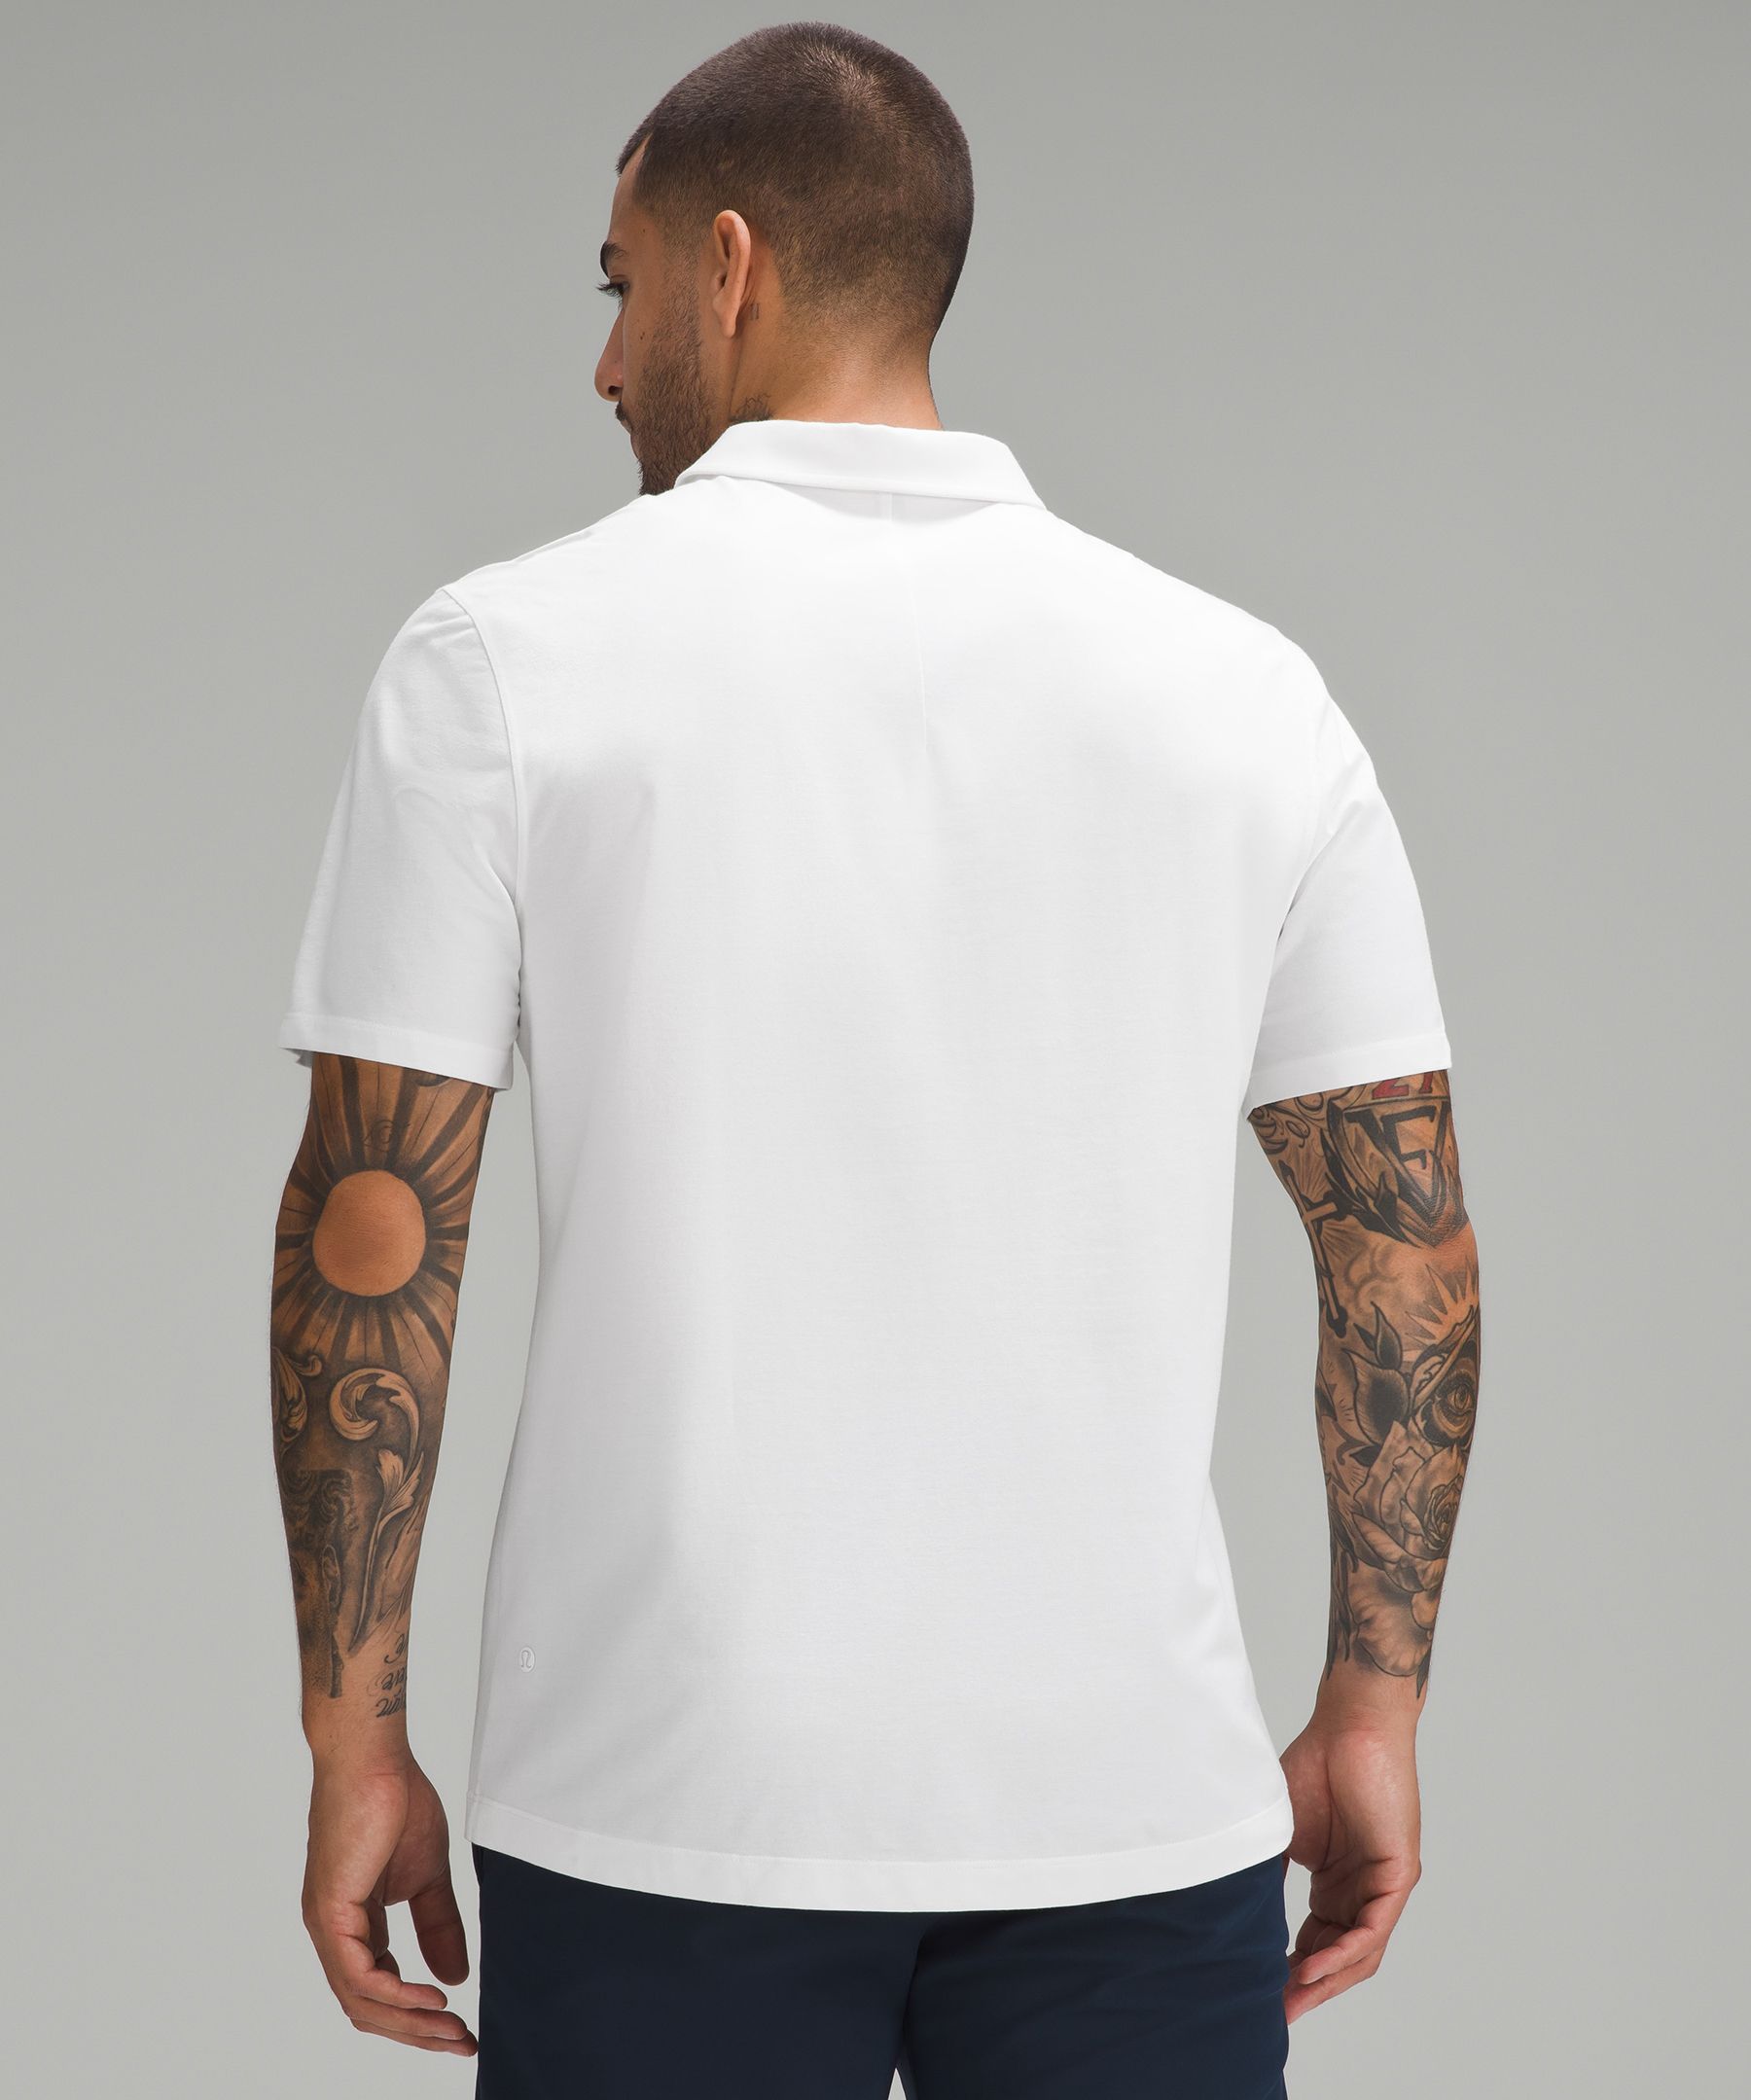 Lululemon Evolution Short-Sleeve Polo Shirt - Black/Neutral - Size S